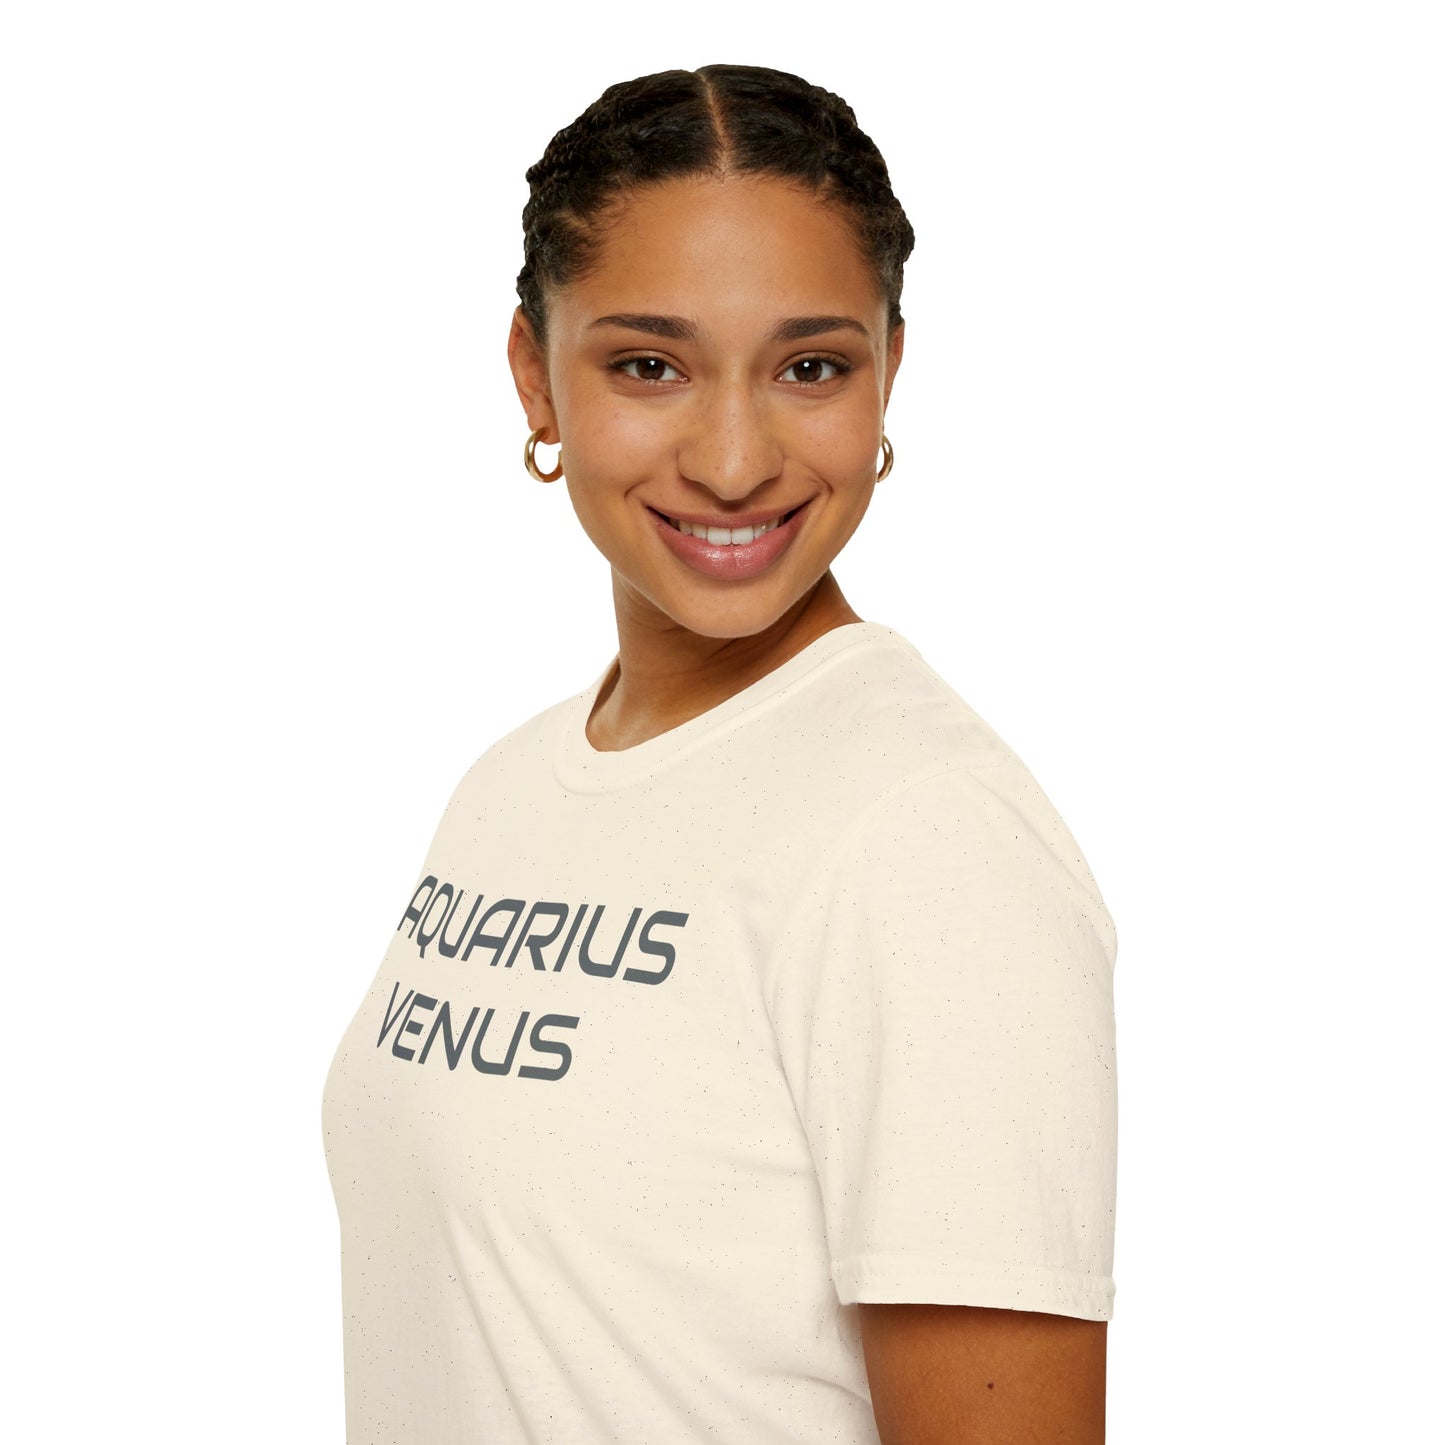 Aquarius Venus Softstyle T-Shirt